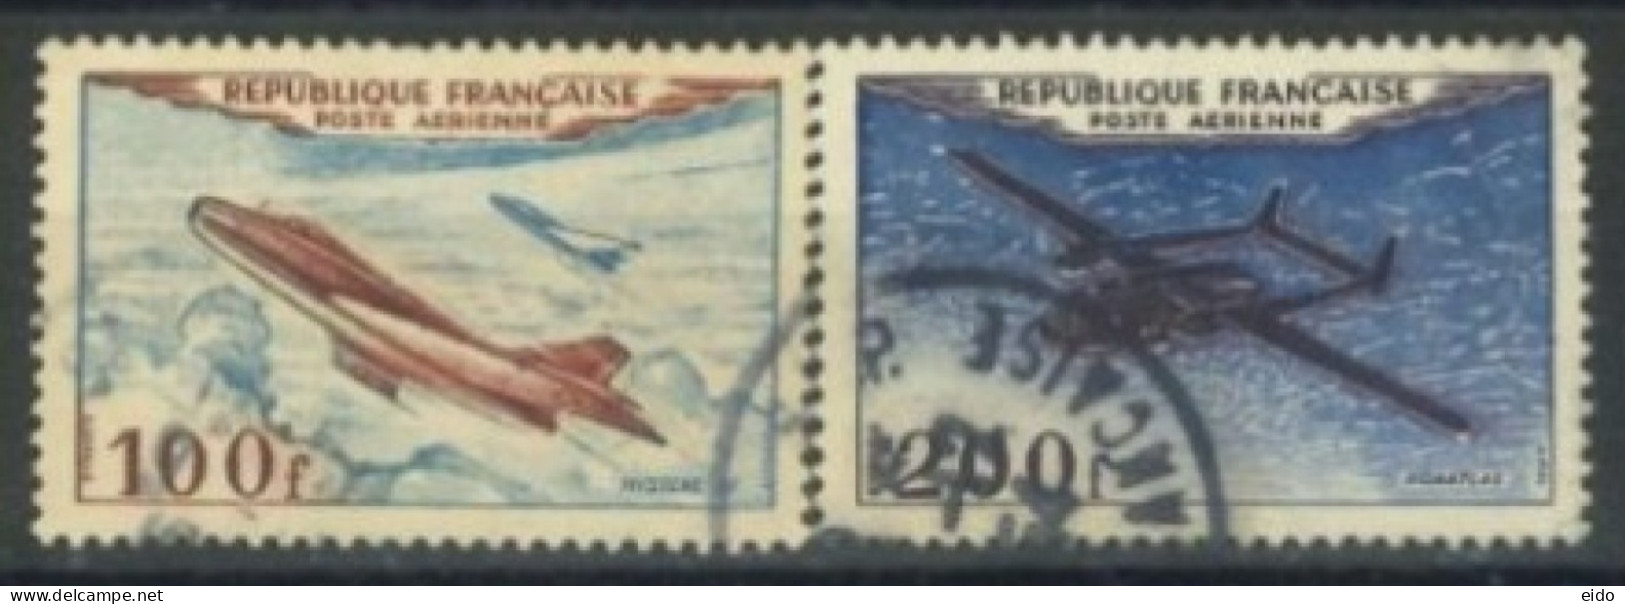 FRANCE - 1954 - AIR PLANES STAMPS SET OF 2, USED - Gebruikt